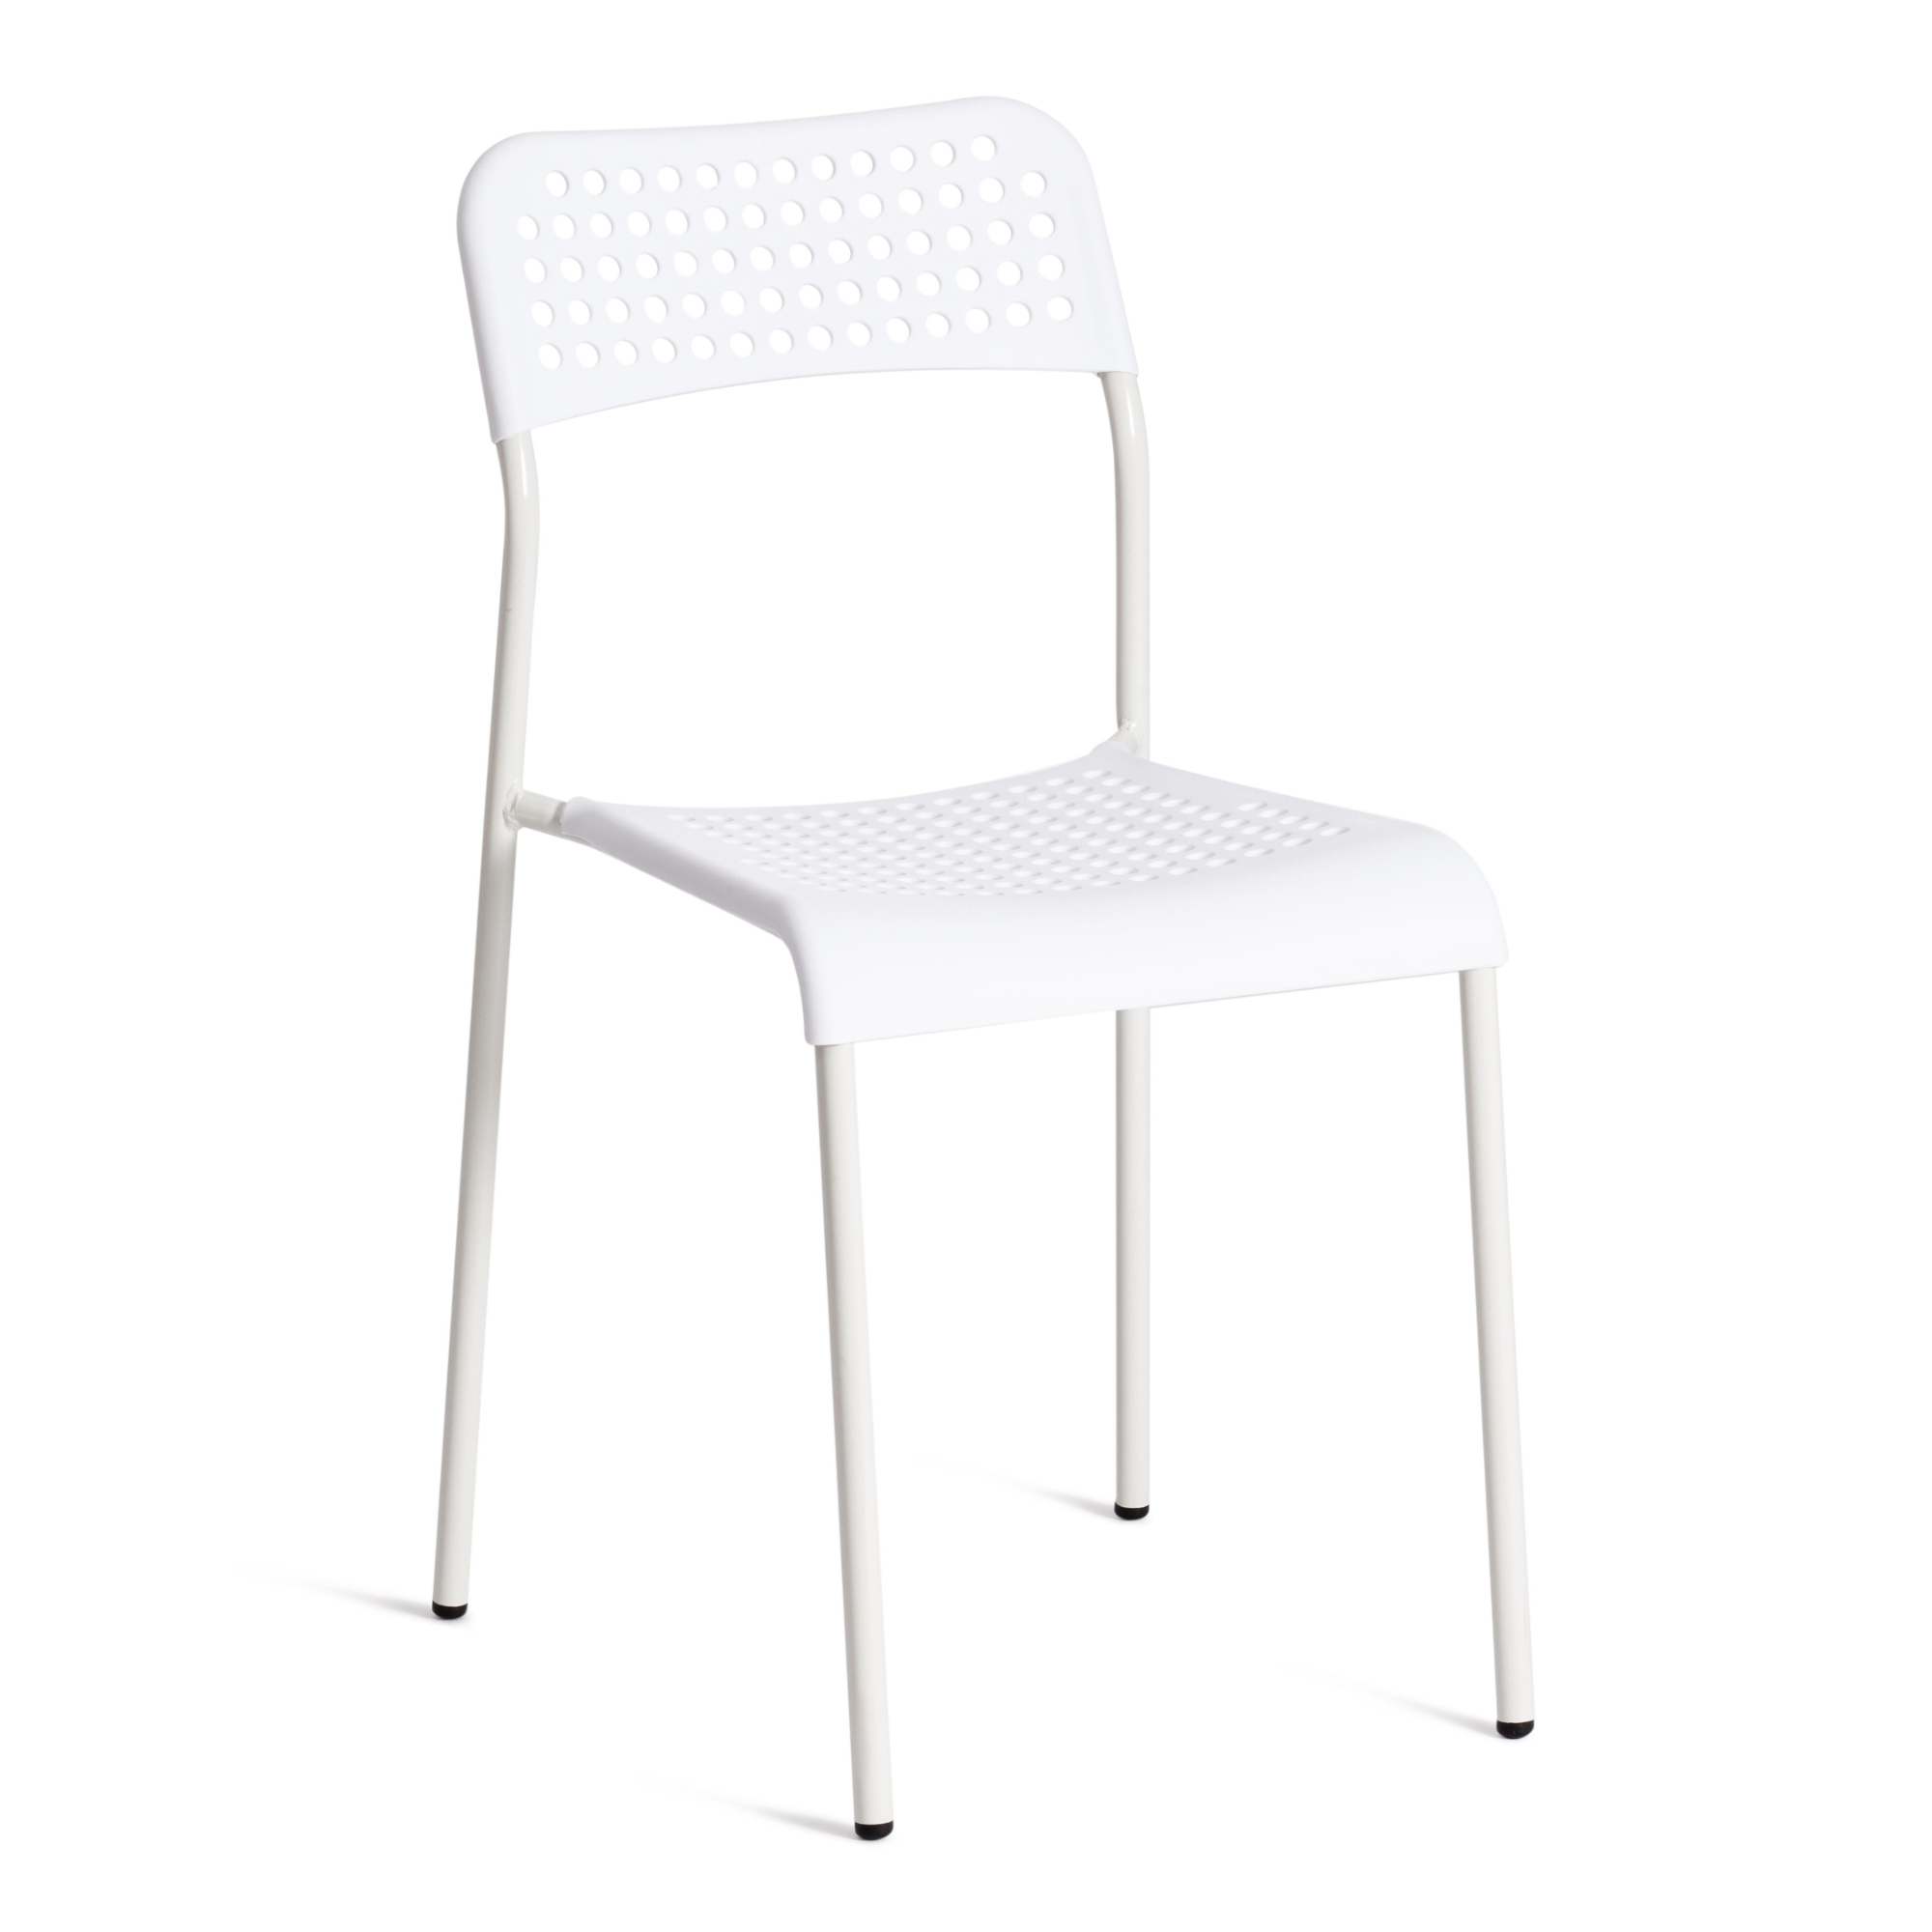 Стул ТС Adde белый пластиковый с металлическими ножками 39х49х78 см стул тс cindy chair пластиковый с ножками из бука белый 45х51х82 см